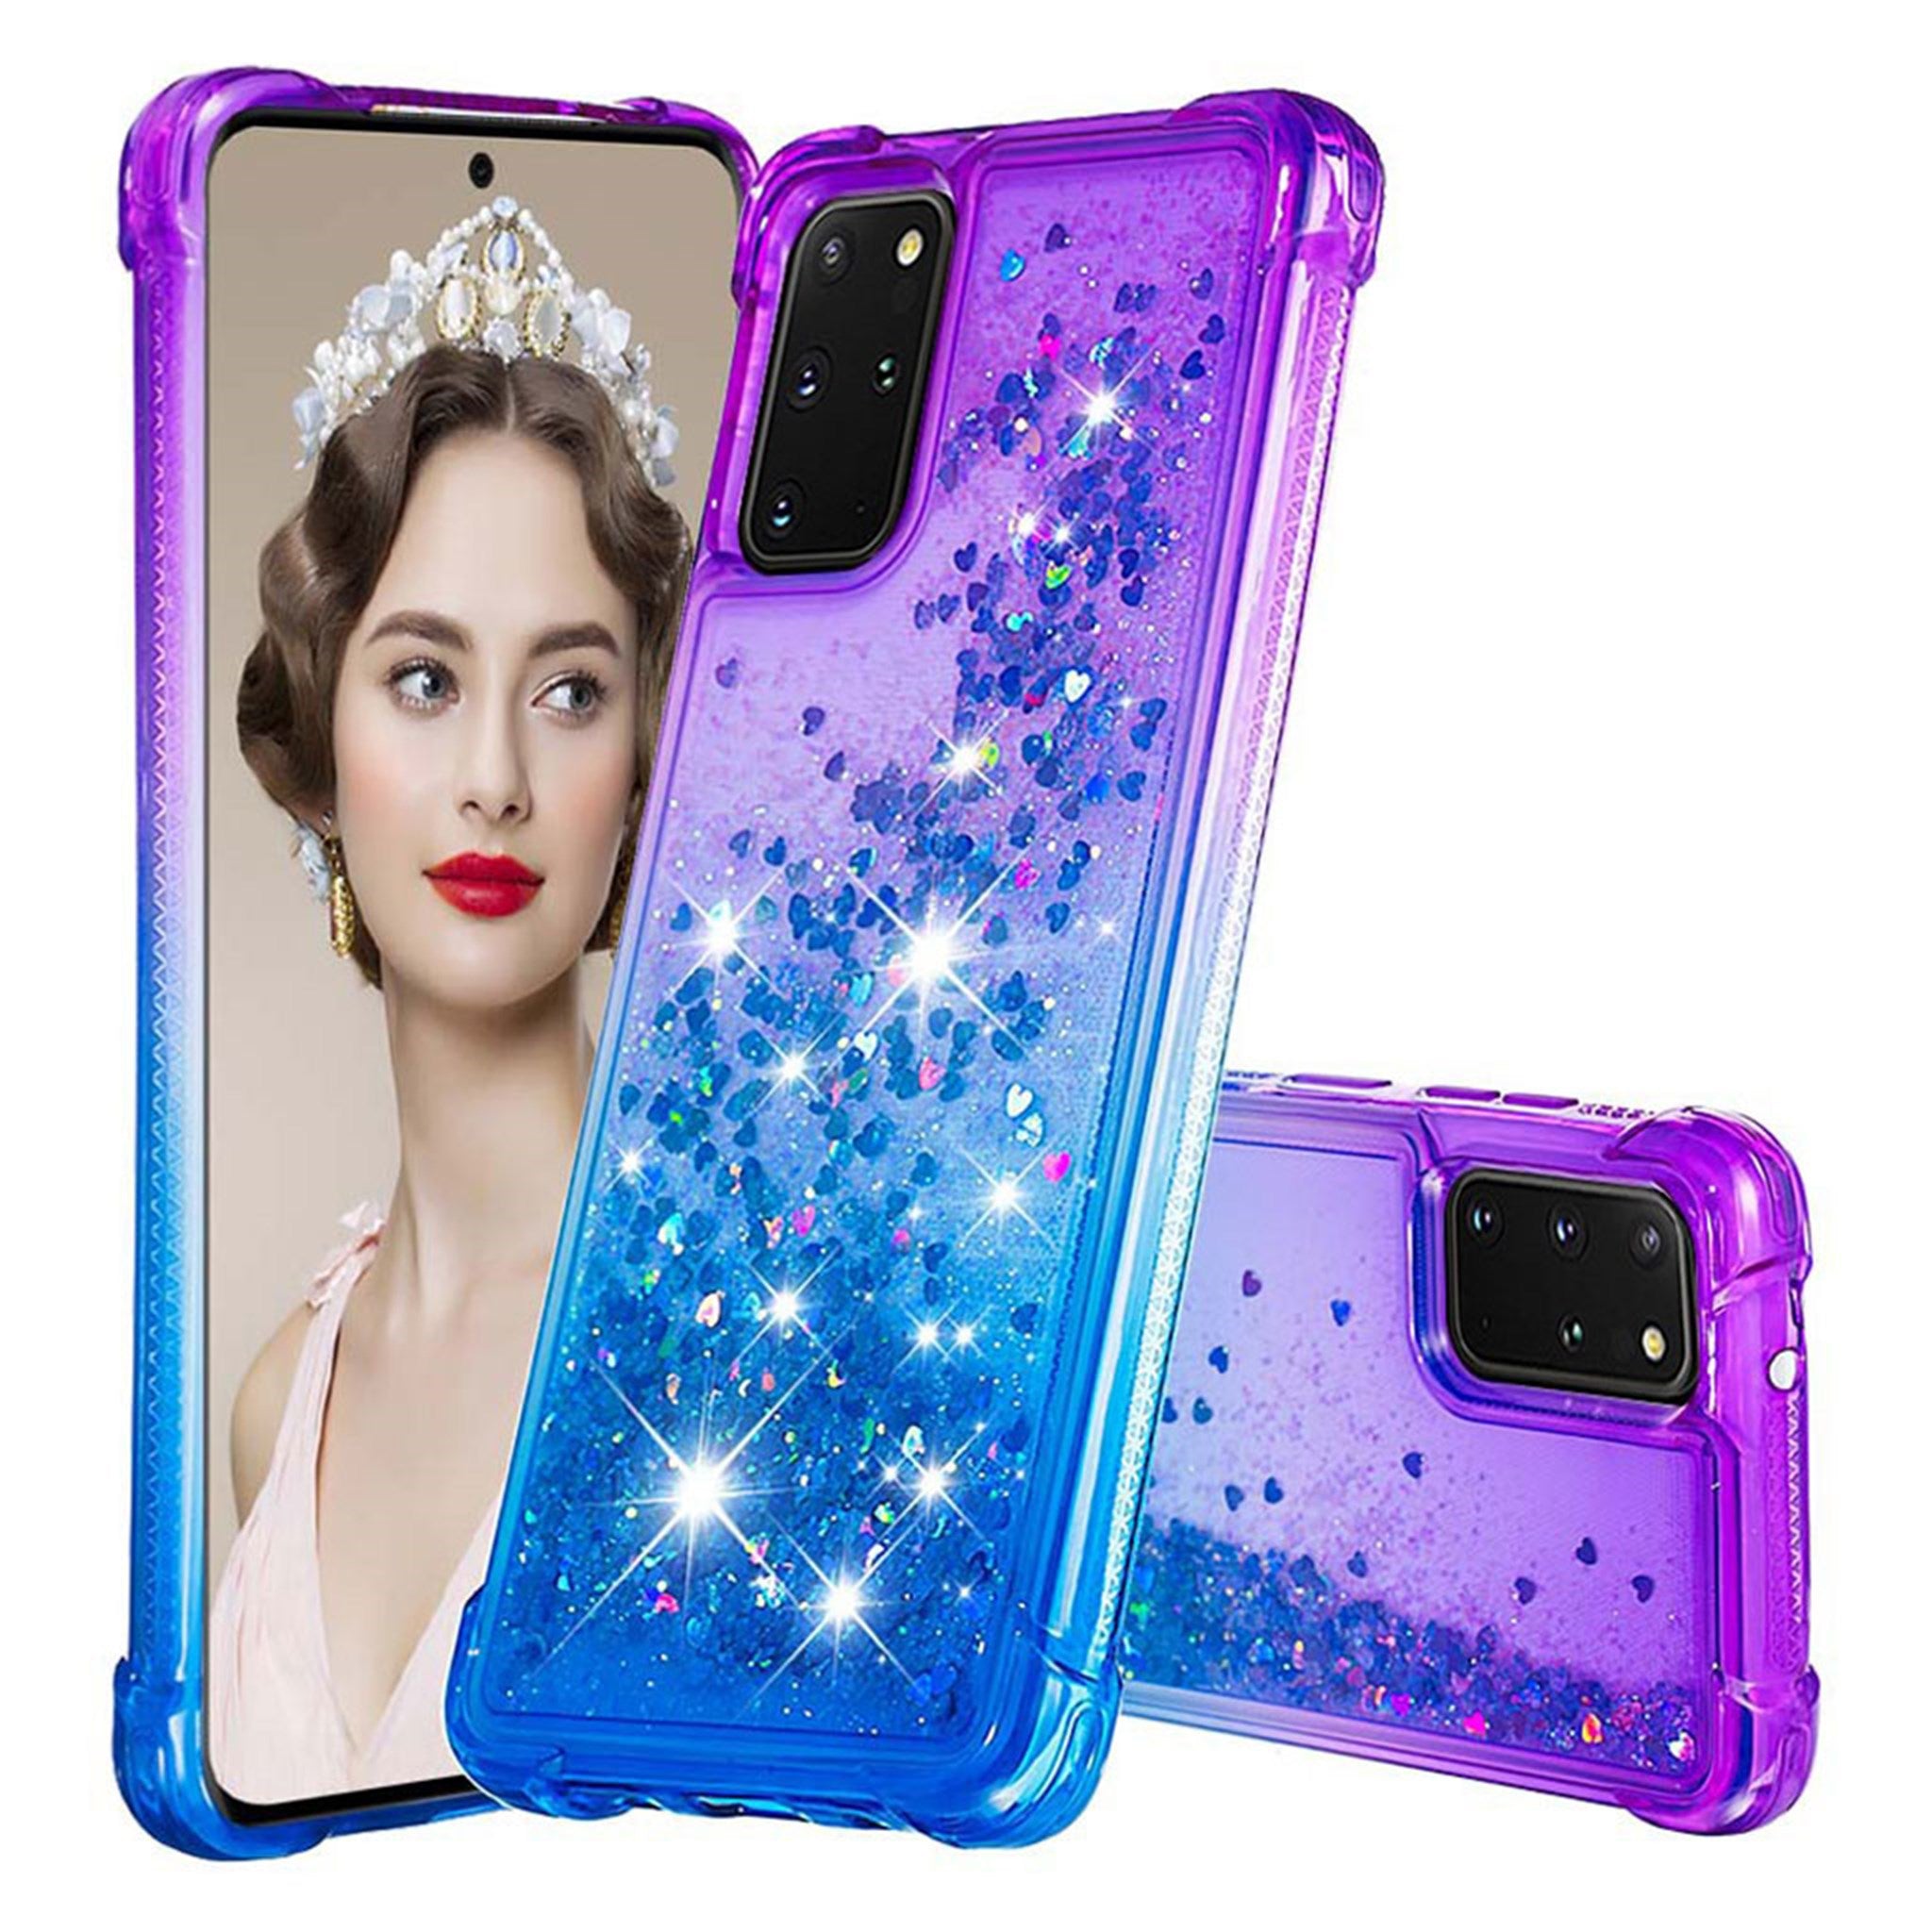 Princess Samsung Galaxy S20 Plus cover - Purple / Blue